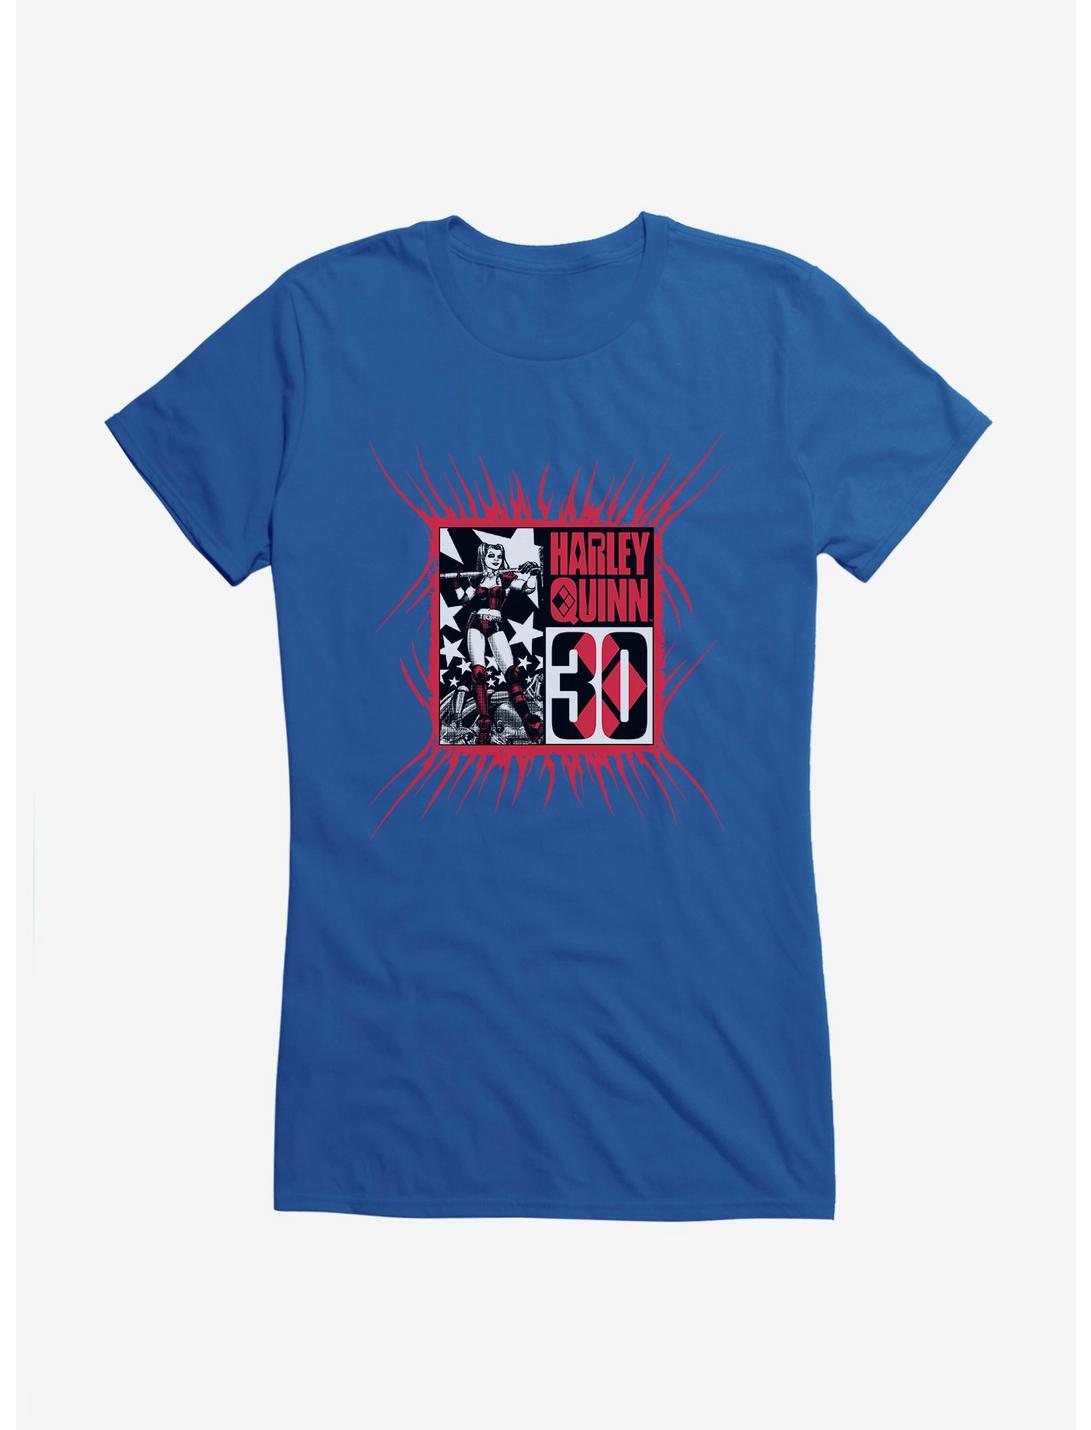 Harley Quinn 30Th Anniversary Girls T-Shirt, , hi-res